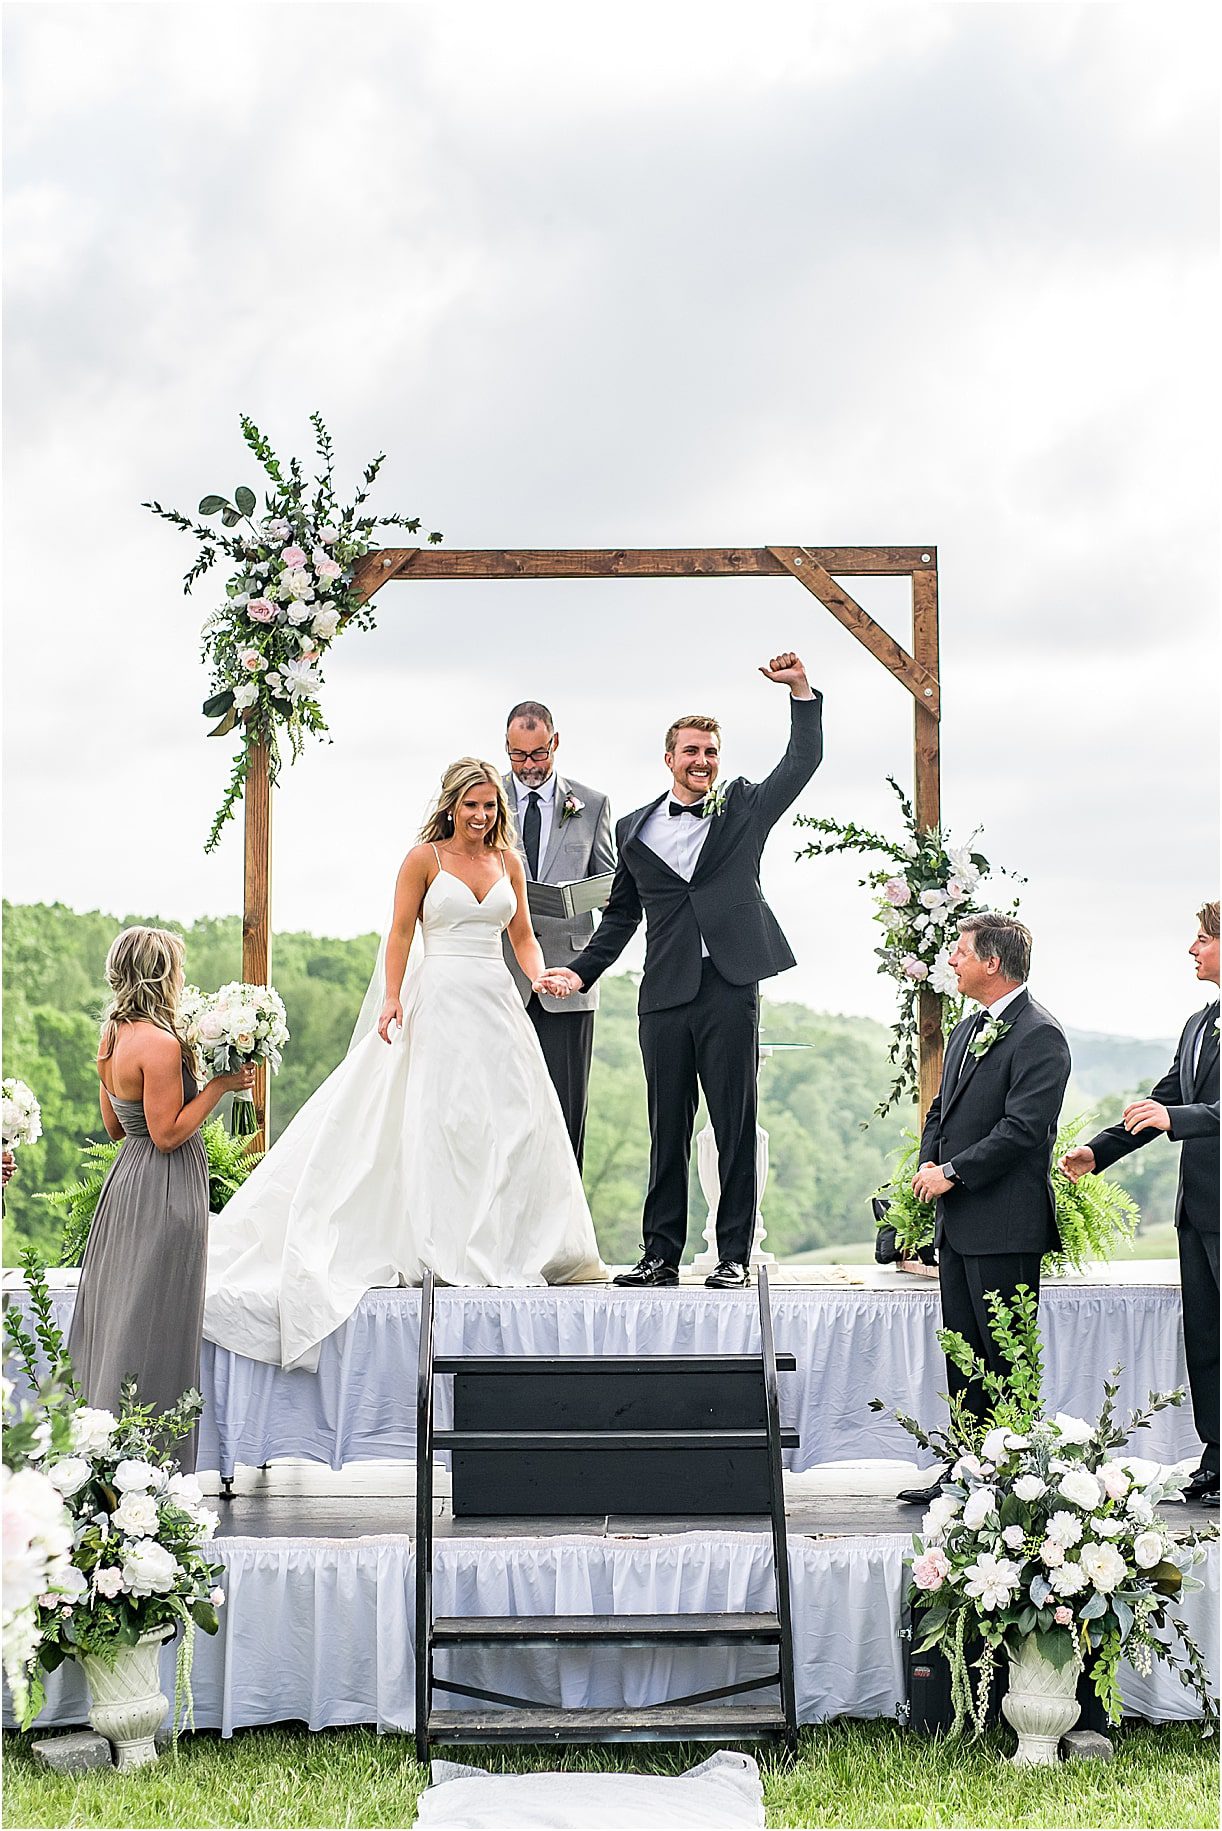 Drive In Wedding Ideas | COVID Wedding Ceremony Ideas | Hill City Bride Virginia Weddings